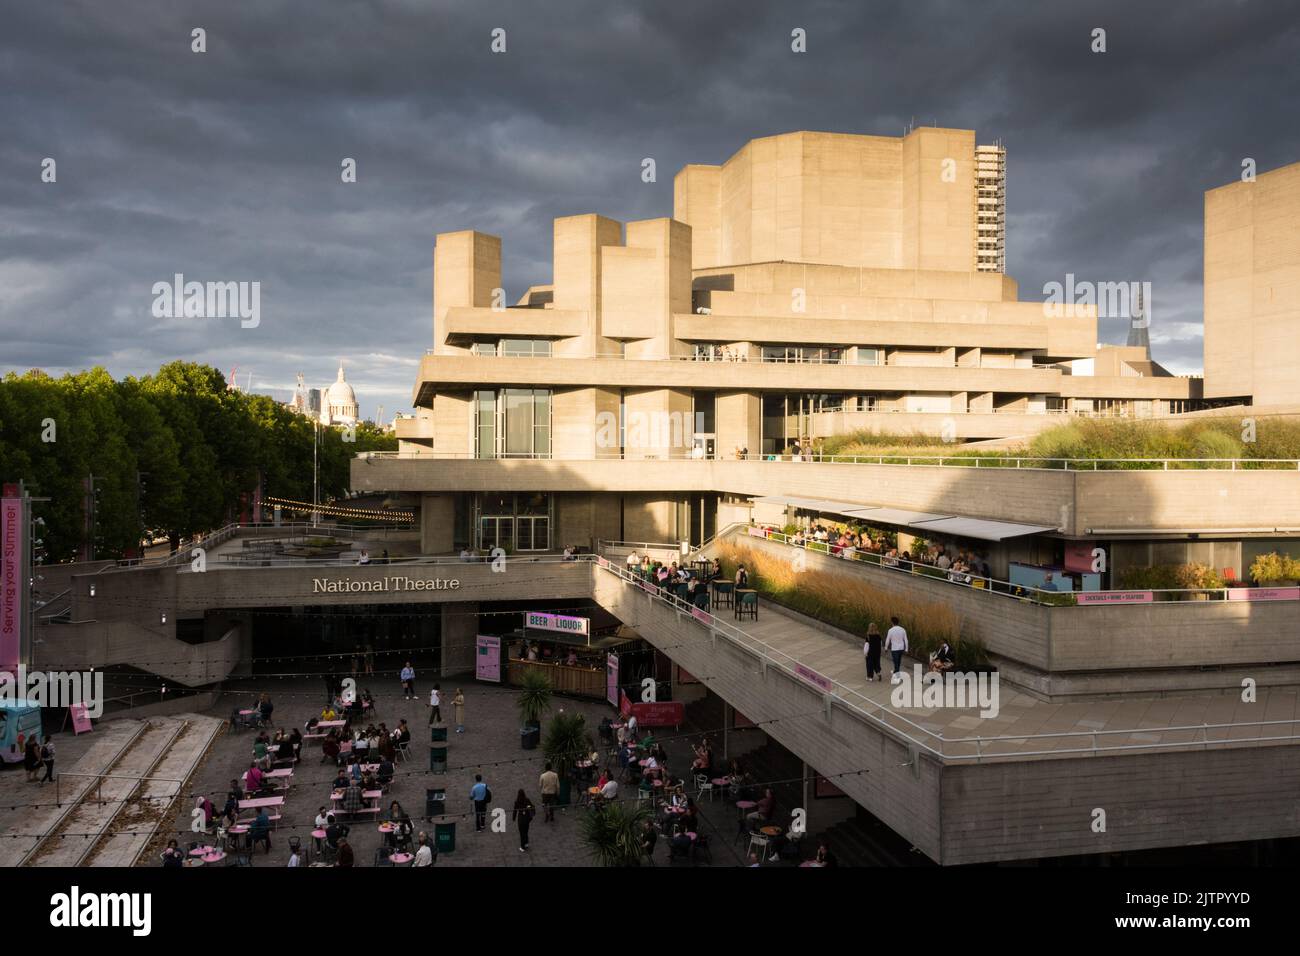 Teatro Nacional de Denys Lasdun en la orilla sur de Londres, Upper Ground, Lambeth, Londres, SE1, REINO UNIDO, Foto de stock